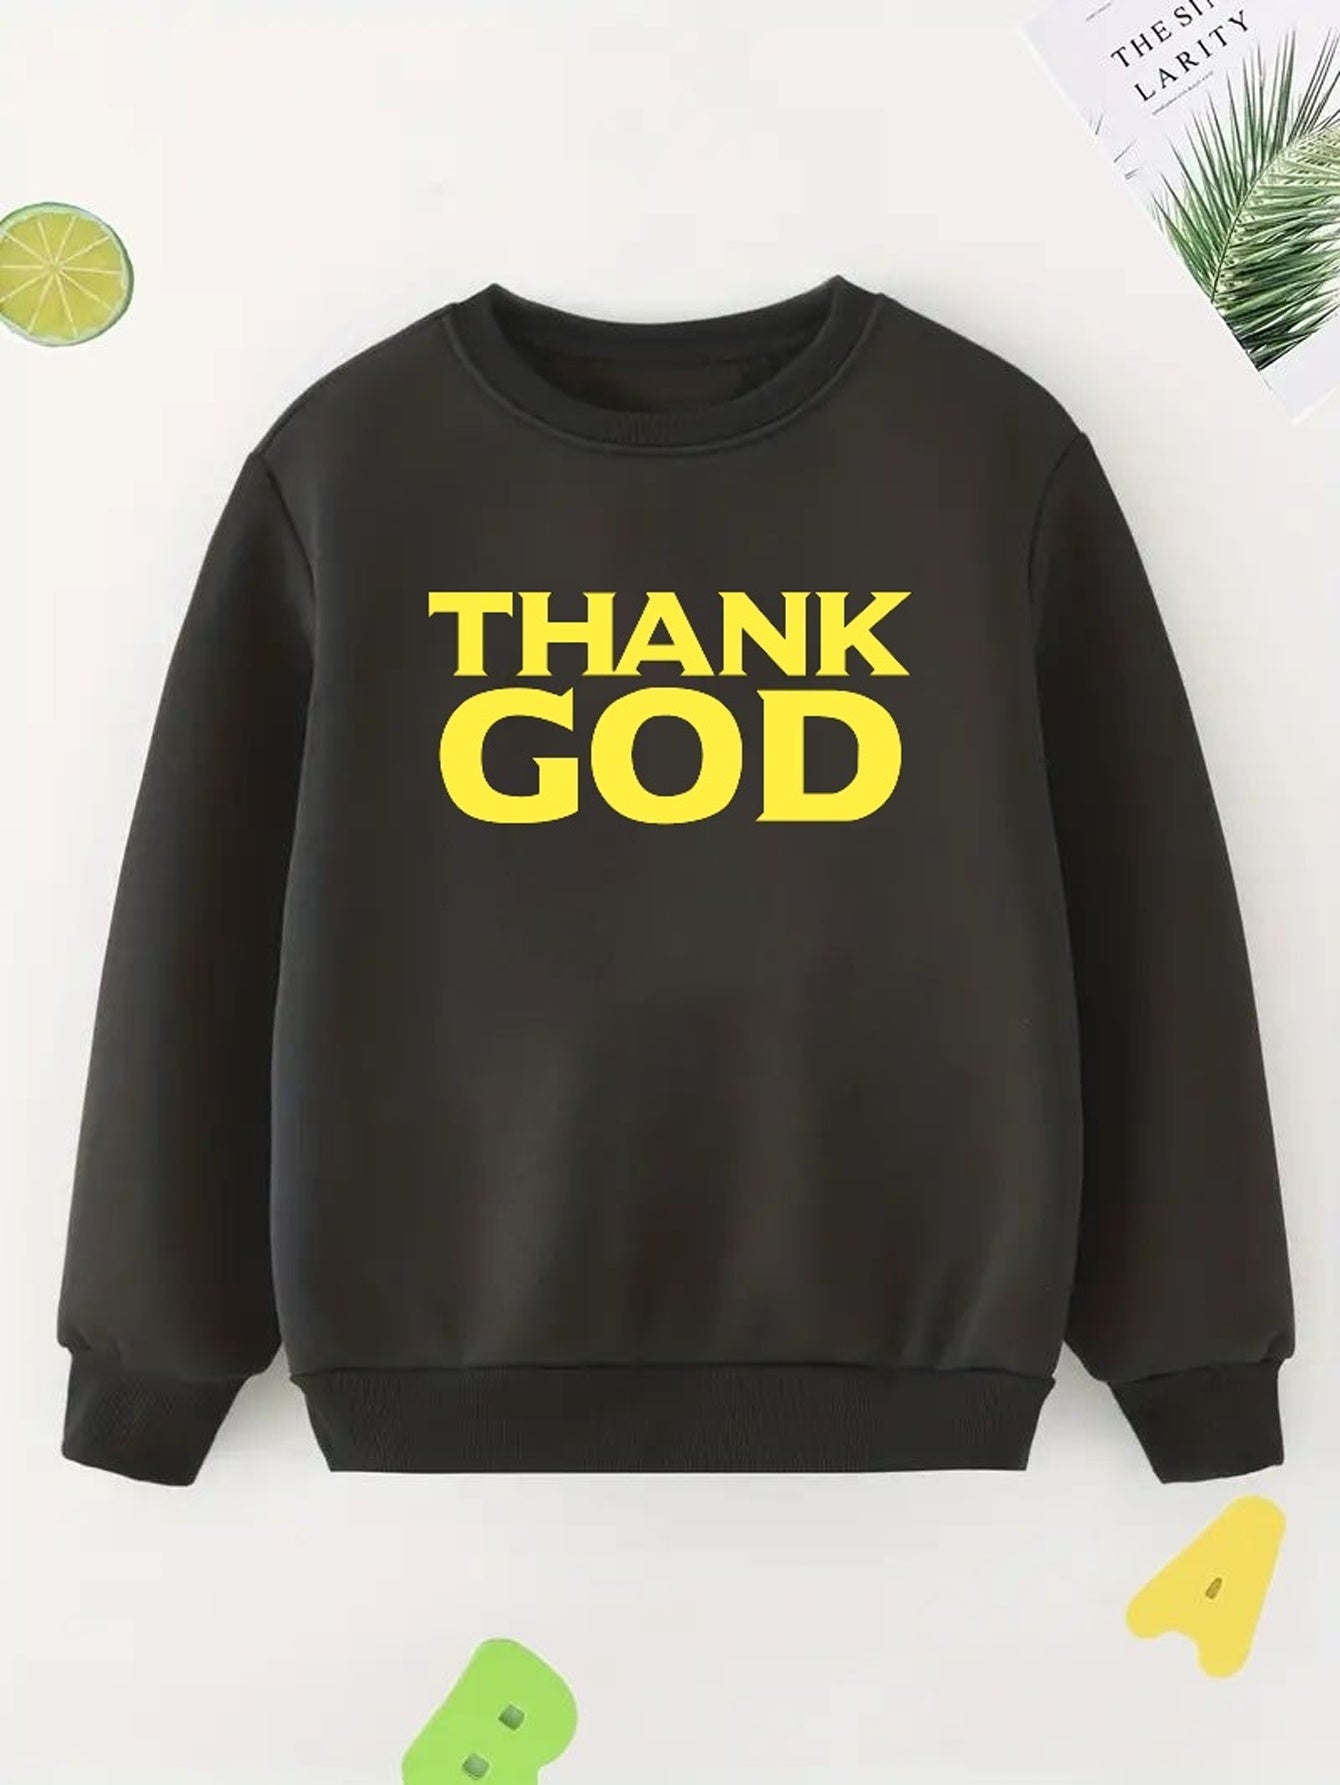 THANK GOD Youth Christian Sweatshirt claimedbygoddesigns